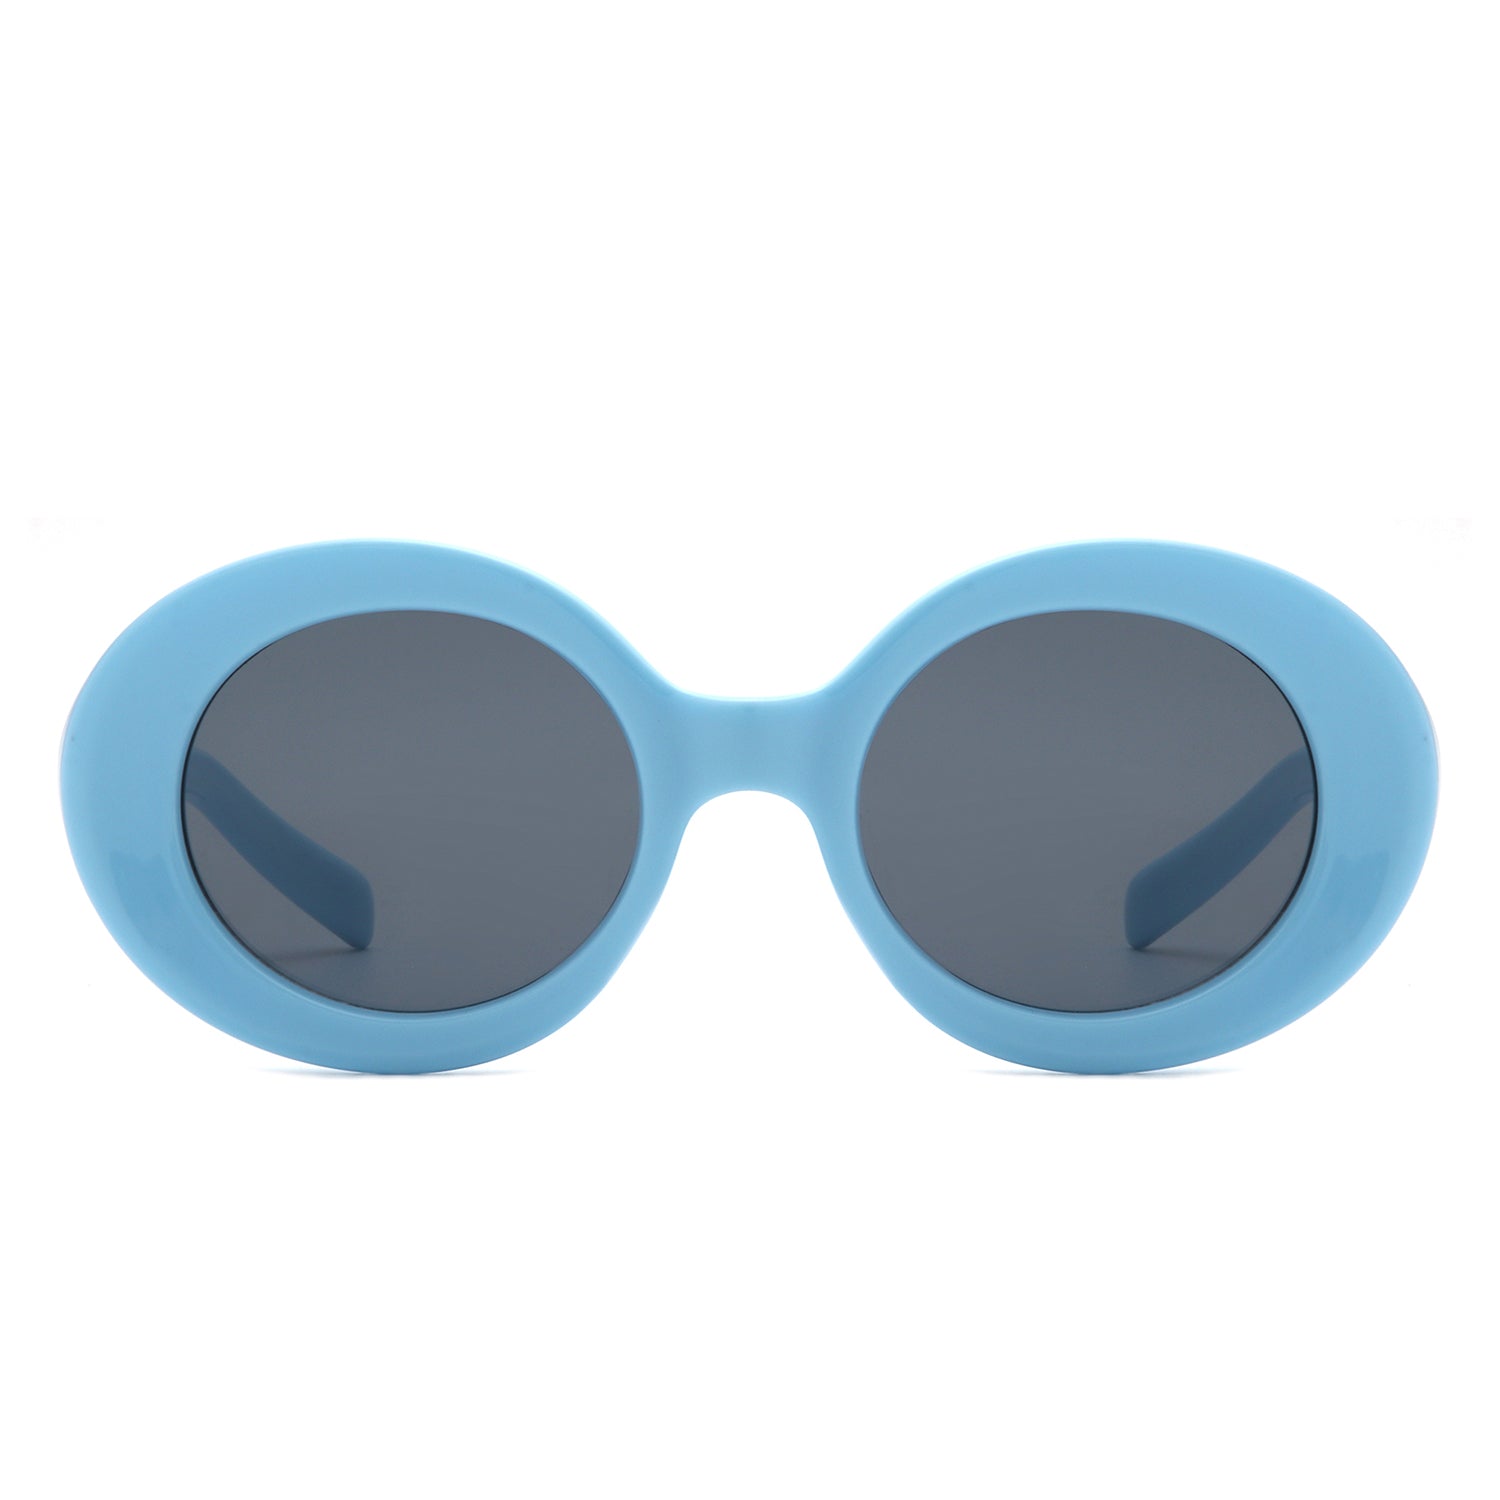 Talyn - Round Retro Fashion Vintage Inspired Oval Sunglasses